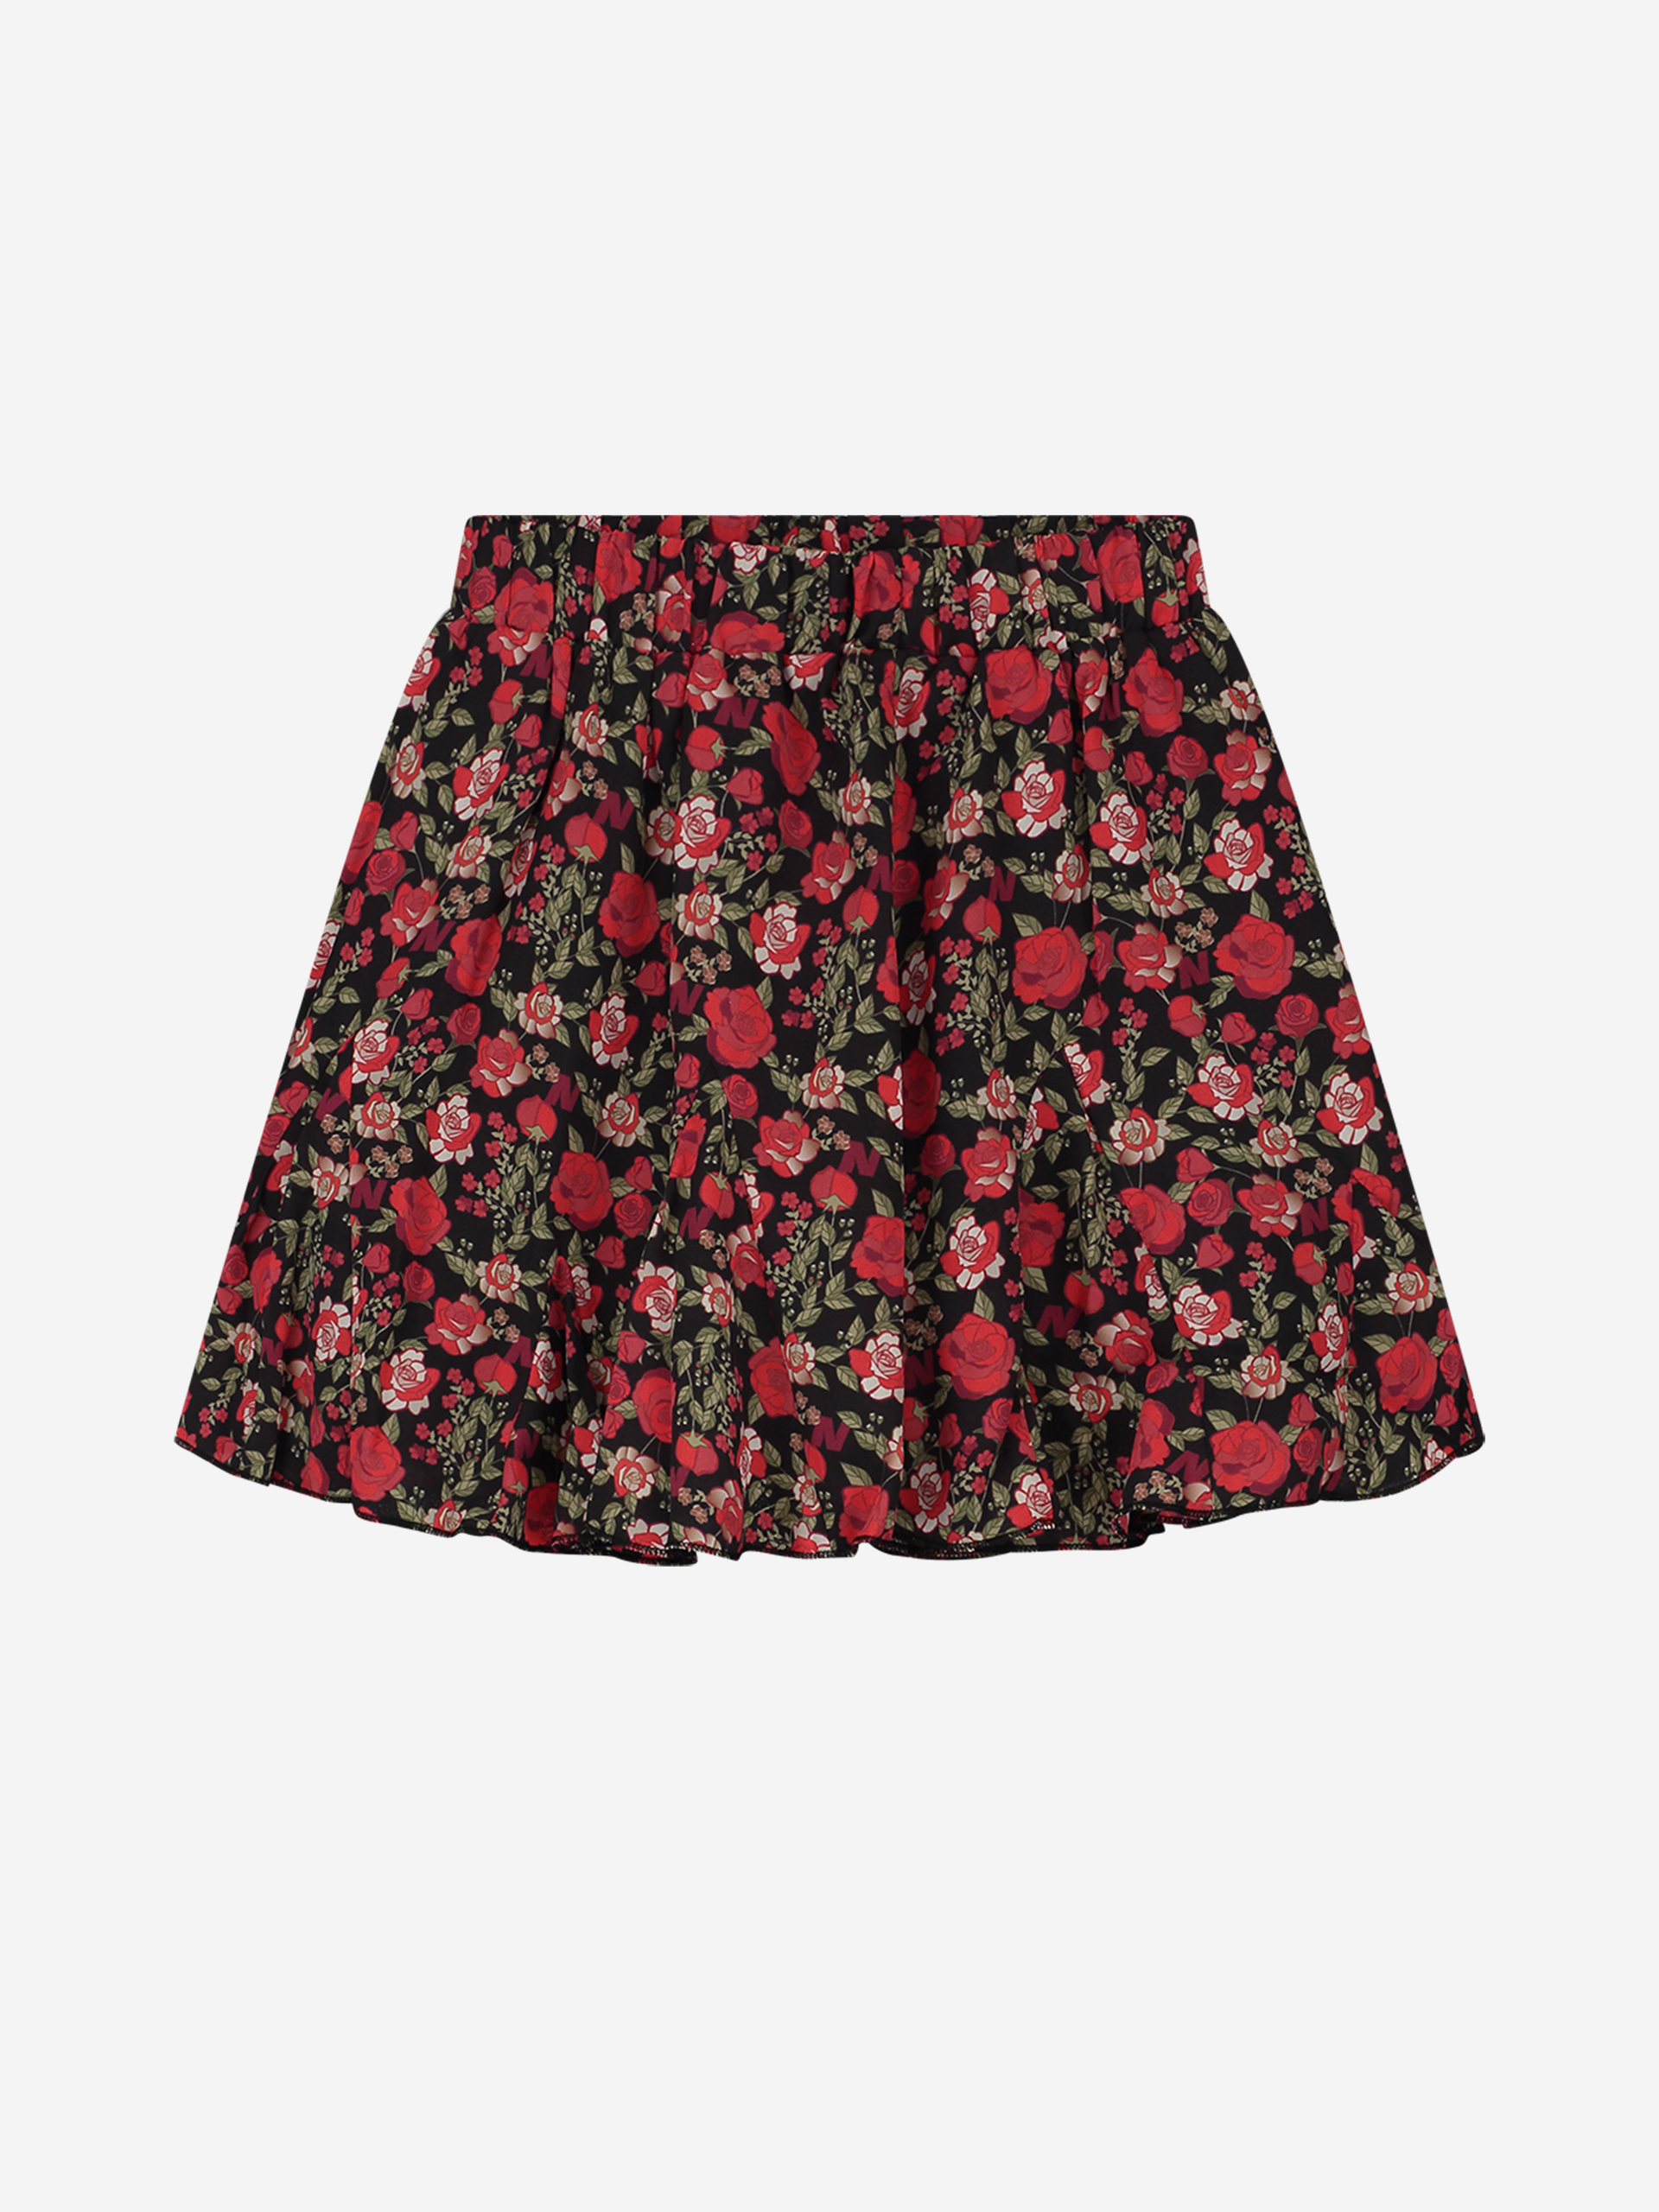 Flower print A-line skirt with ruffles 